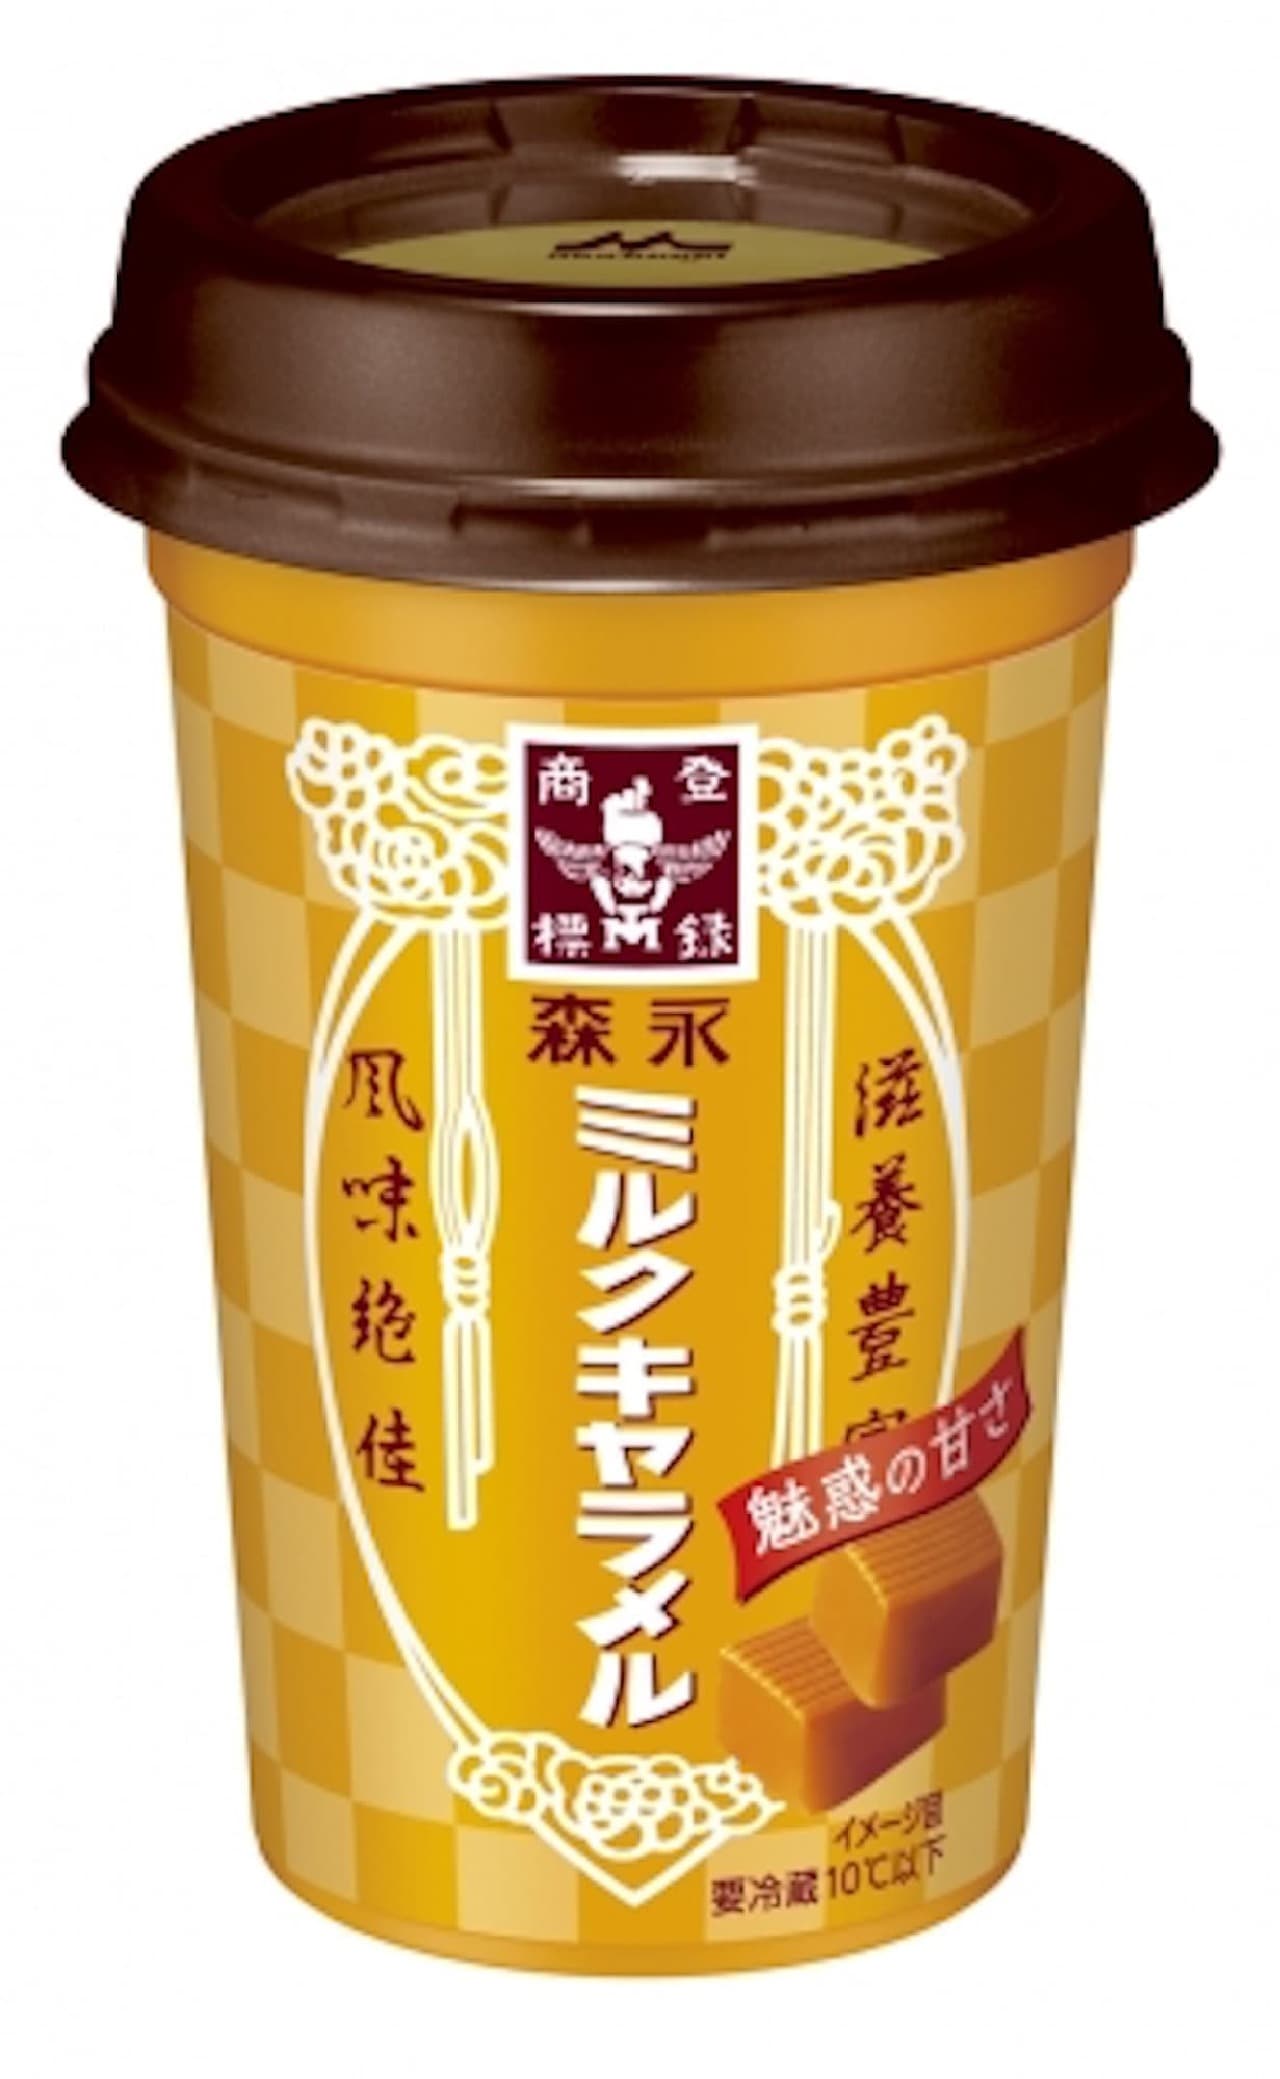 "Morinaga Milk Caramel" Morinaga Milk Industry x Morinaga Confectionery Collaboration Drink